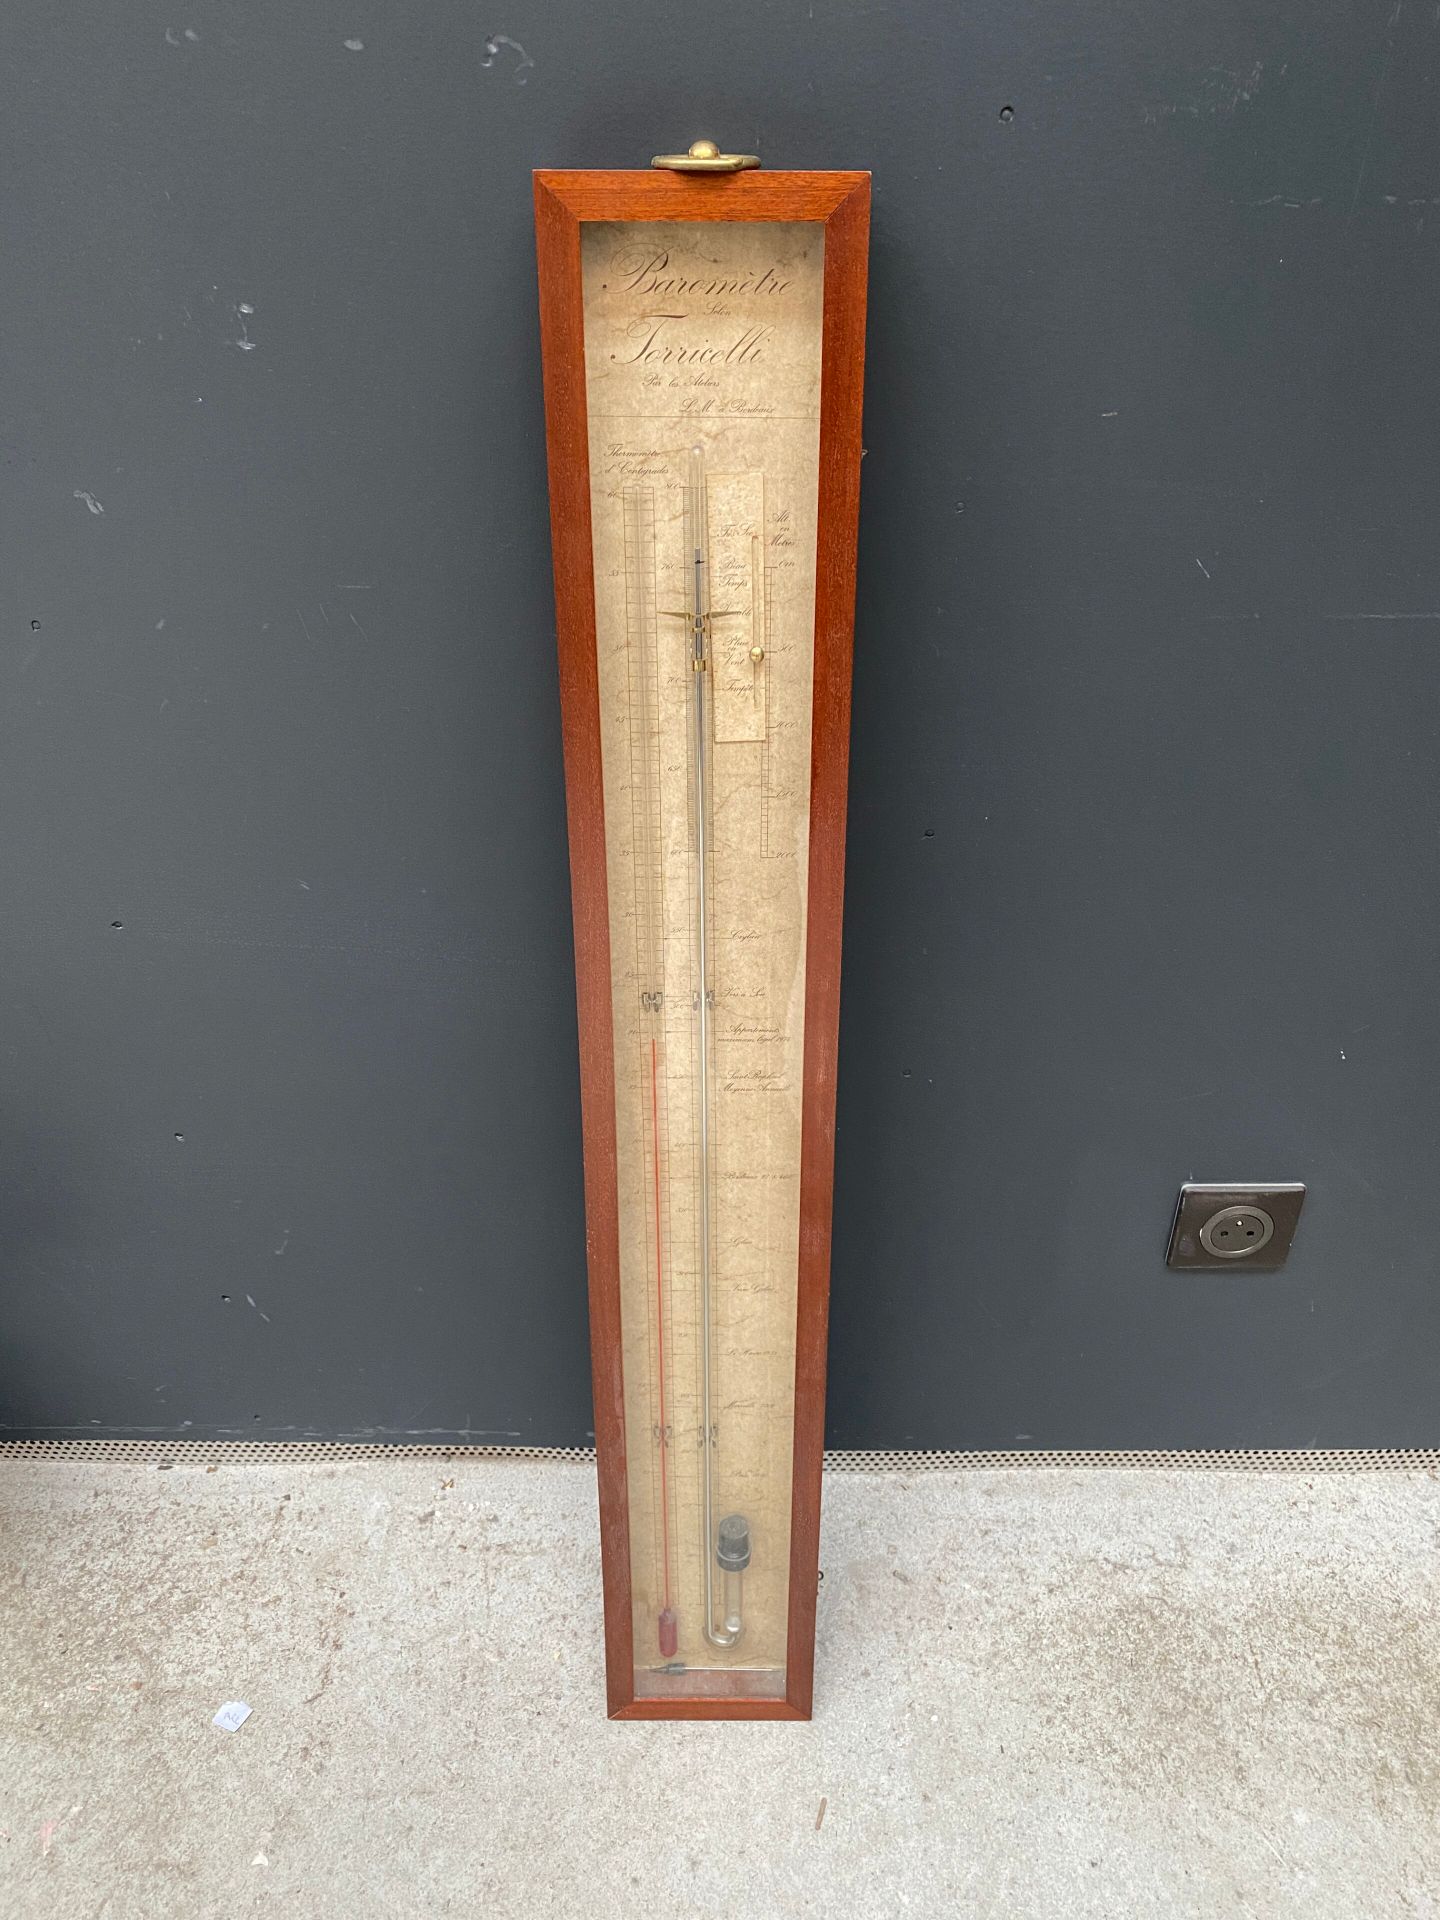 Null Barometro - termometro Torricelli

107 x 15 cm